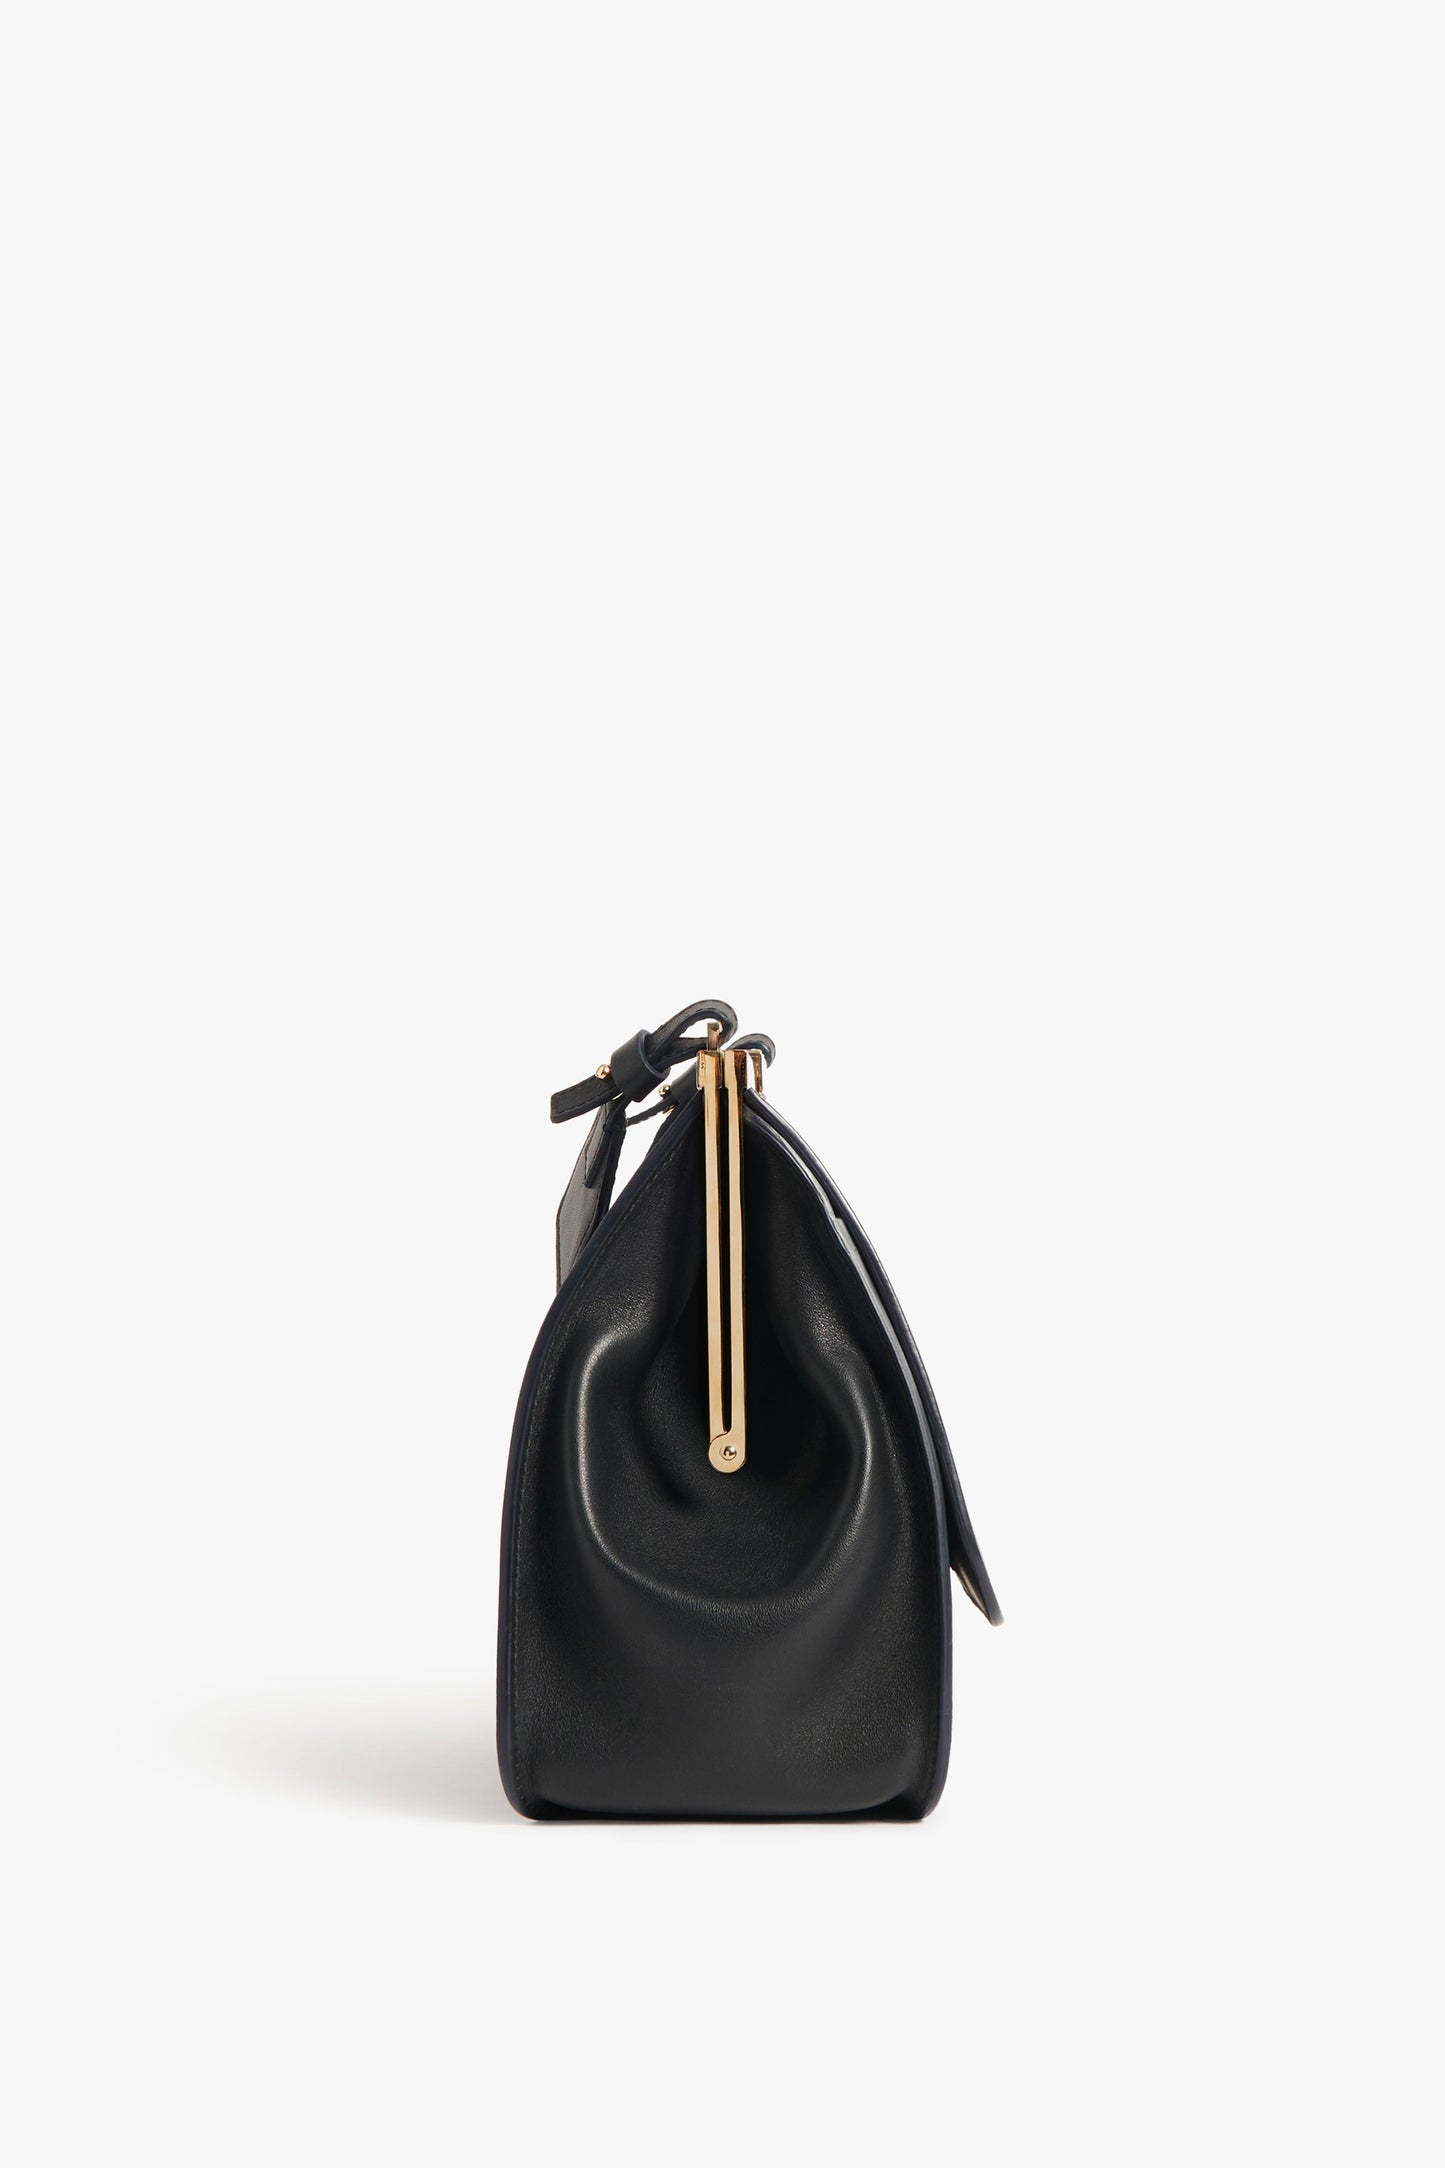 Black Soft Leather Top-Handle Flap Satchel Shoulder Bags